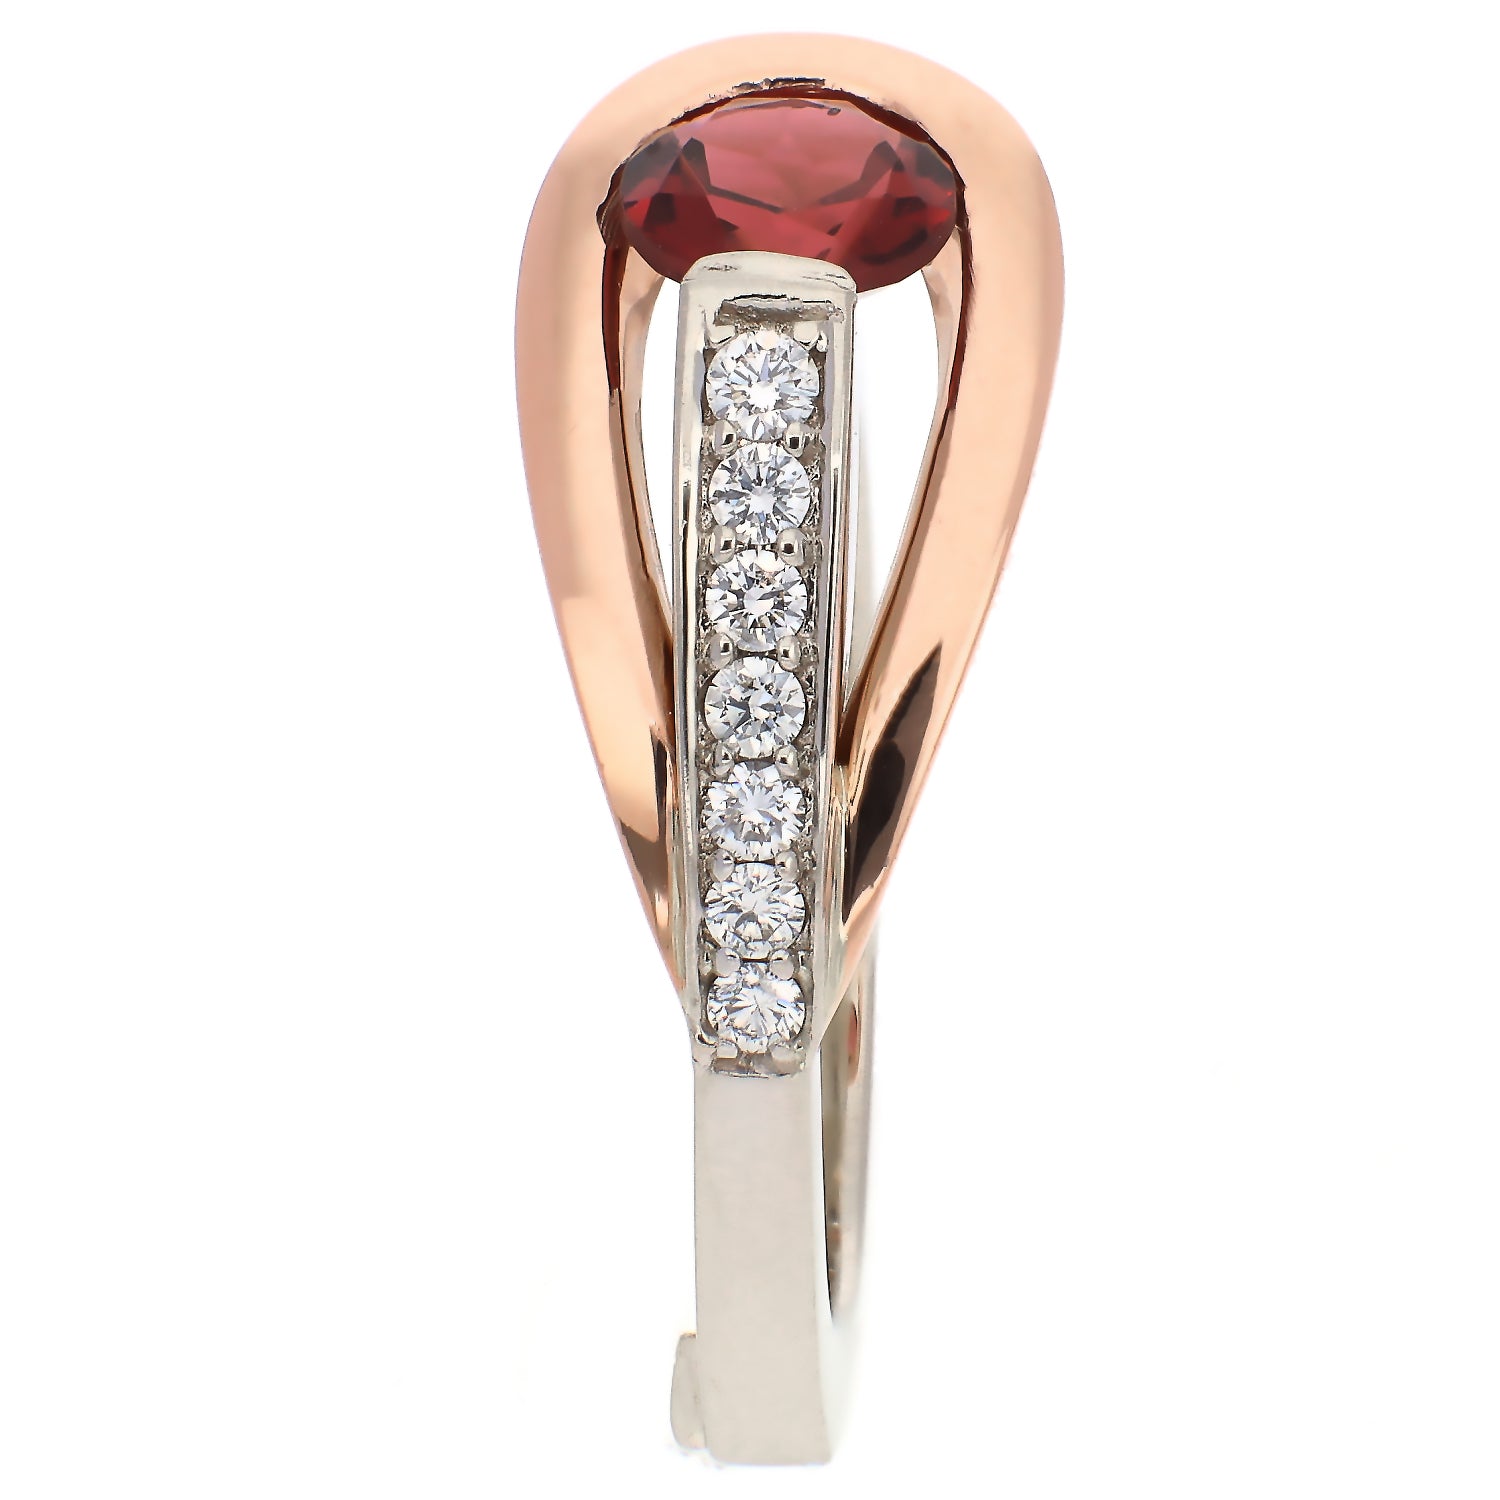 Ancora Design 14K White and Rose Gold Garnet and Diamond Ring